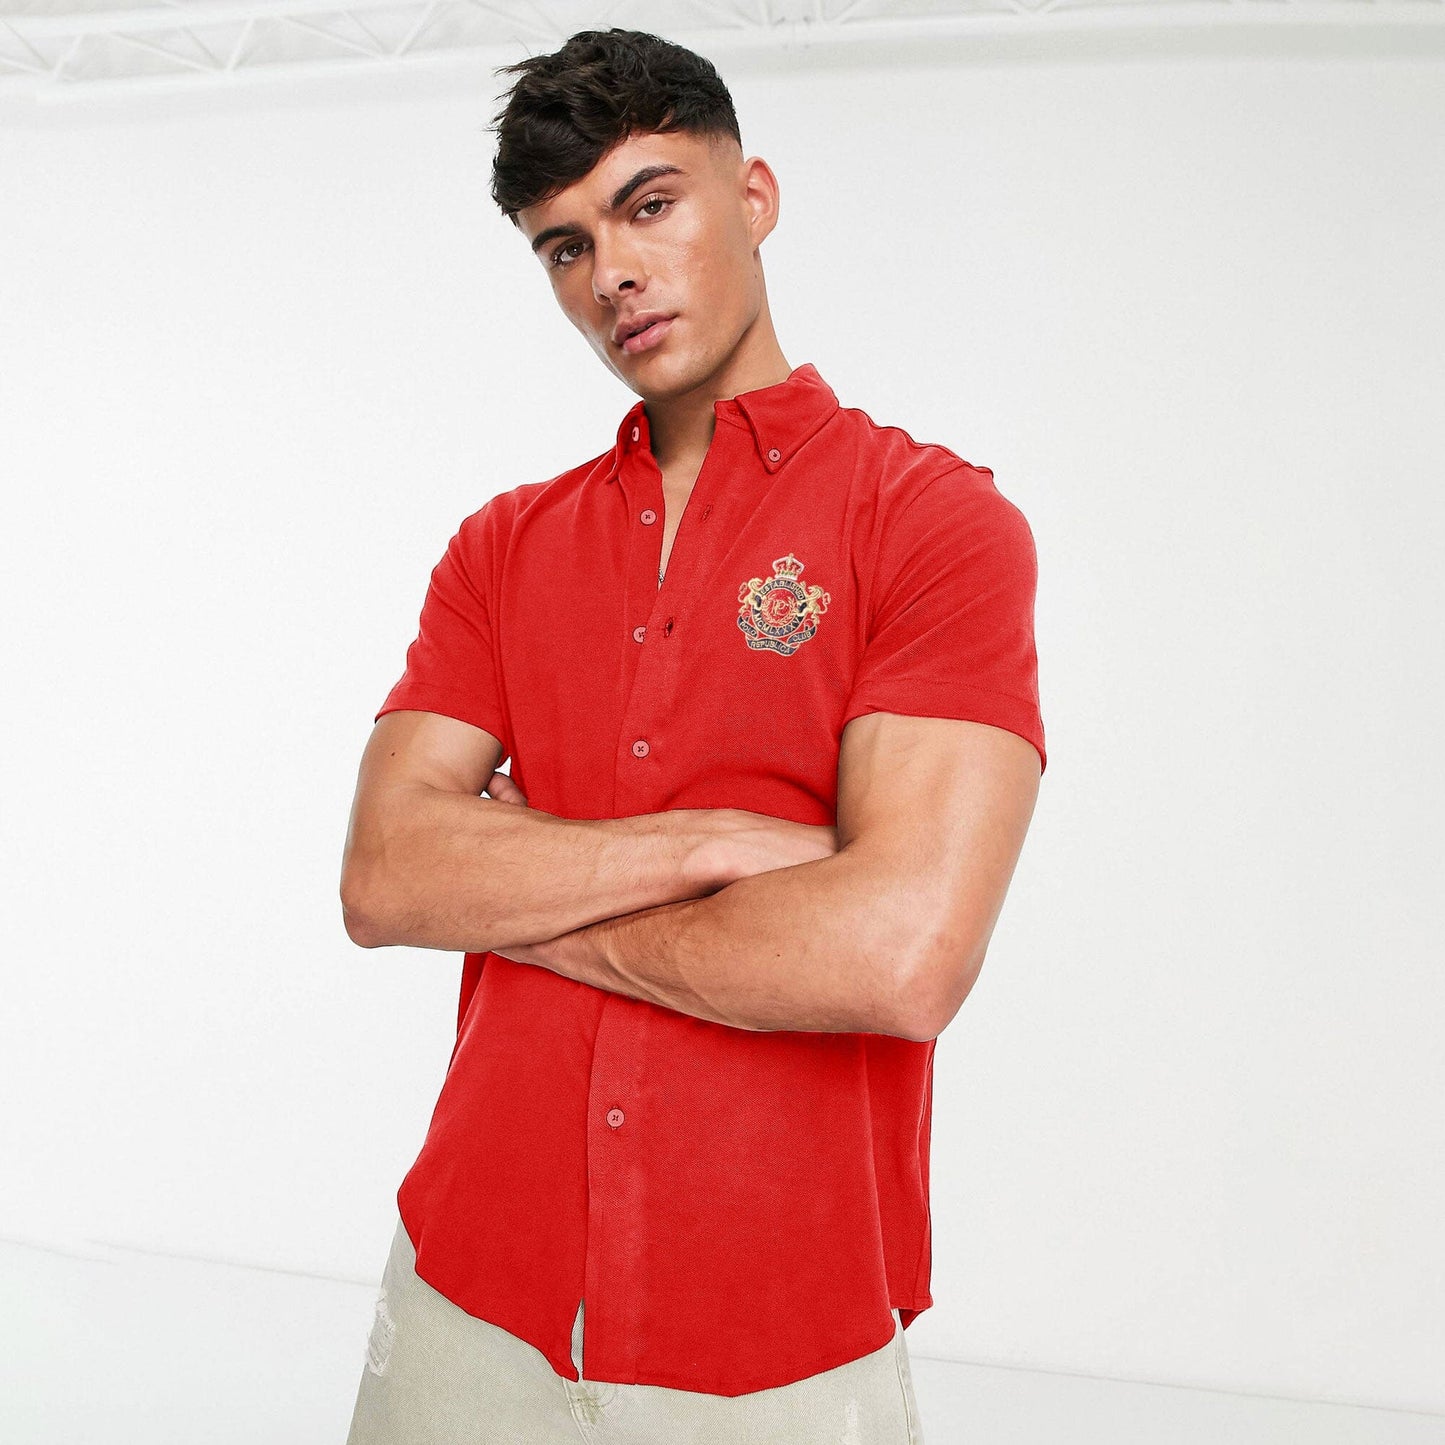 Polo Republica Men's Crest Embroidered Pique Casual Shirt Men's Casual Shirt Polo Republica Red S 